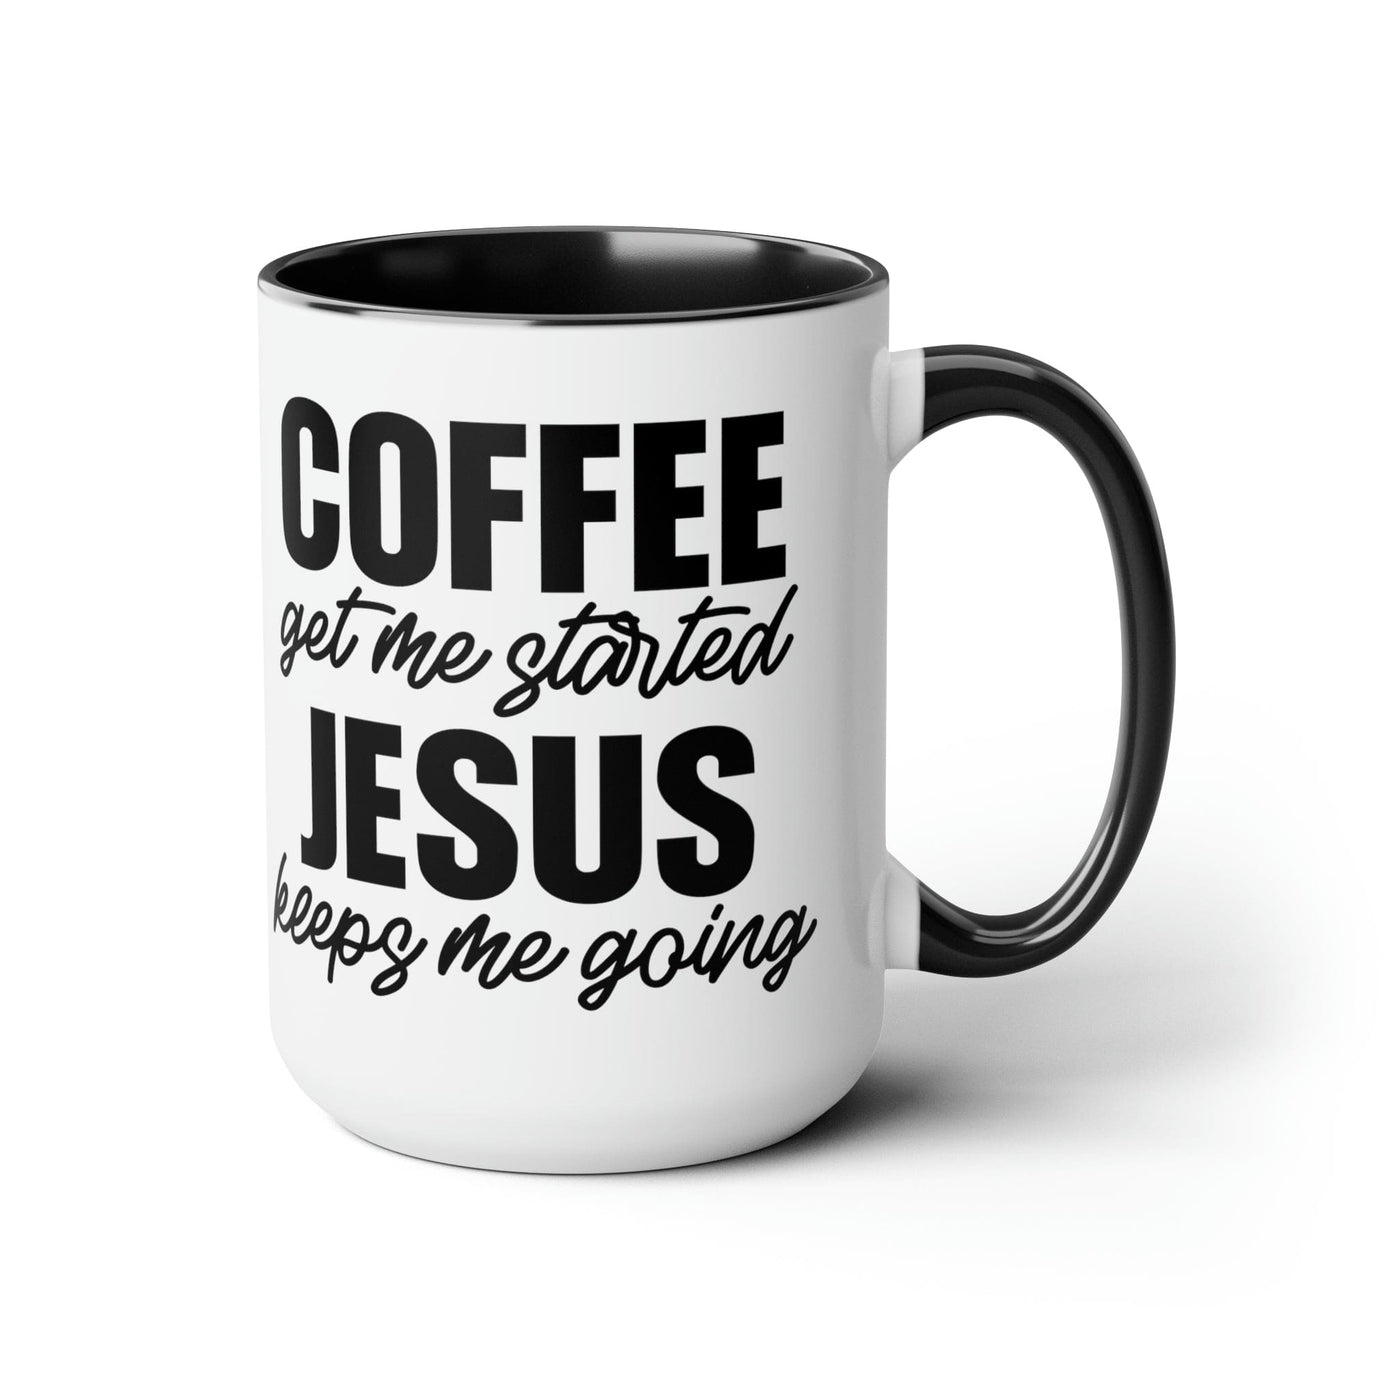 Accent Ceramic Coffee Mug 15oz - Get Me Started Jesus Keeps Going Decorative